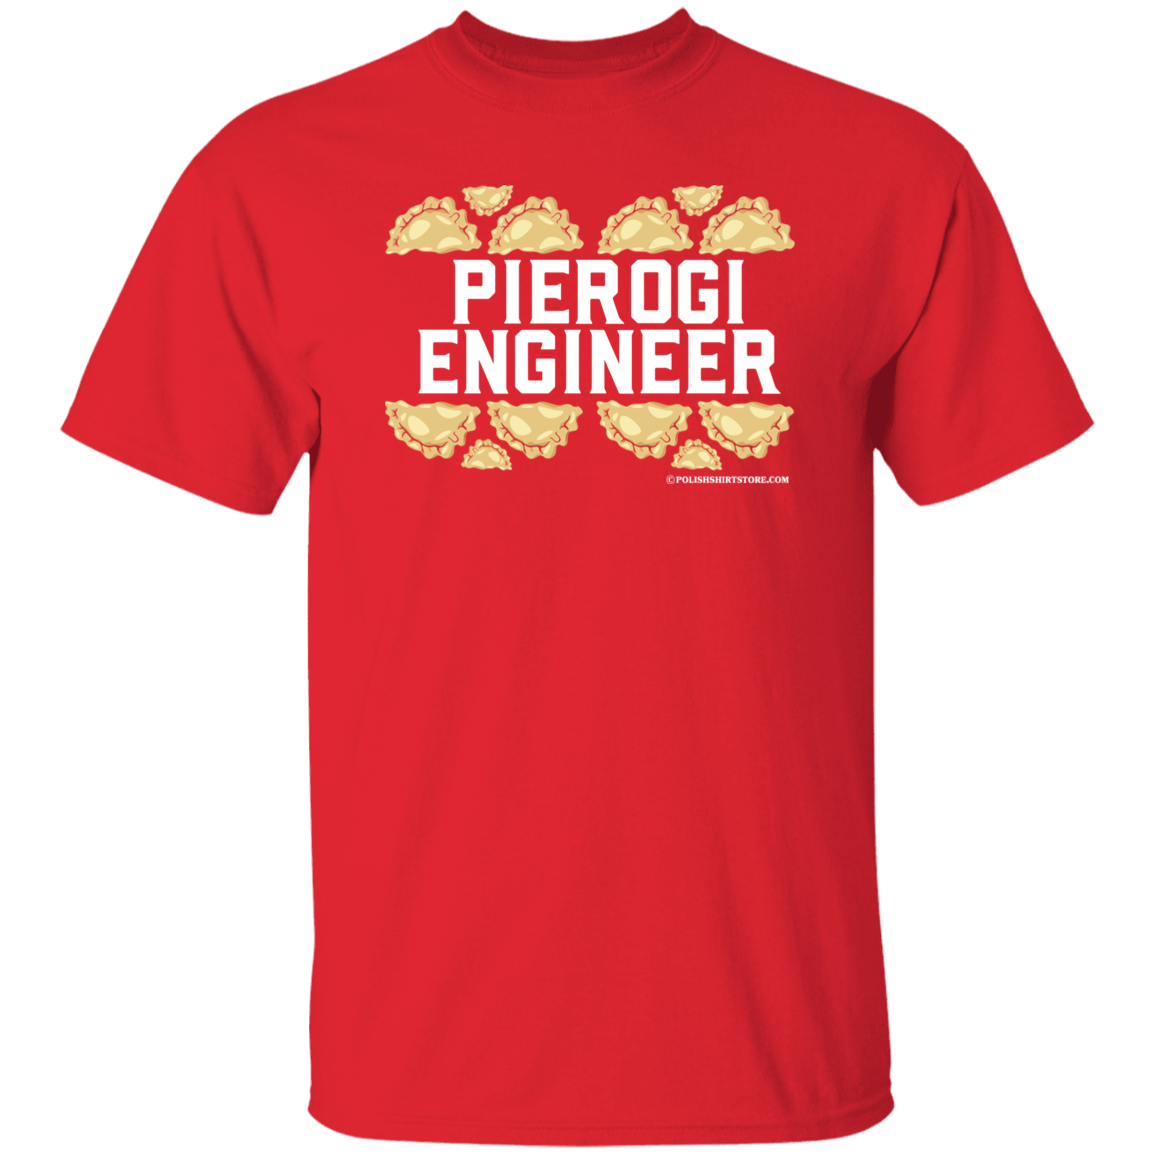 Pierogi Engineer T-Shirt Apparel CustomCat G500 5.3 oz. T-Shirt Red S